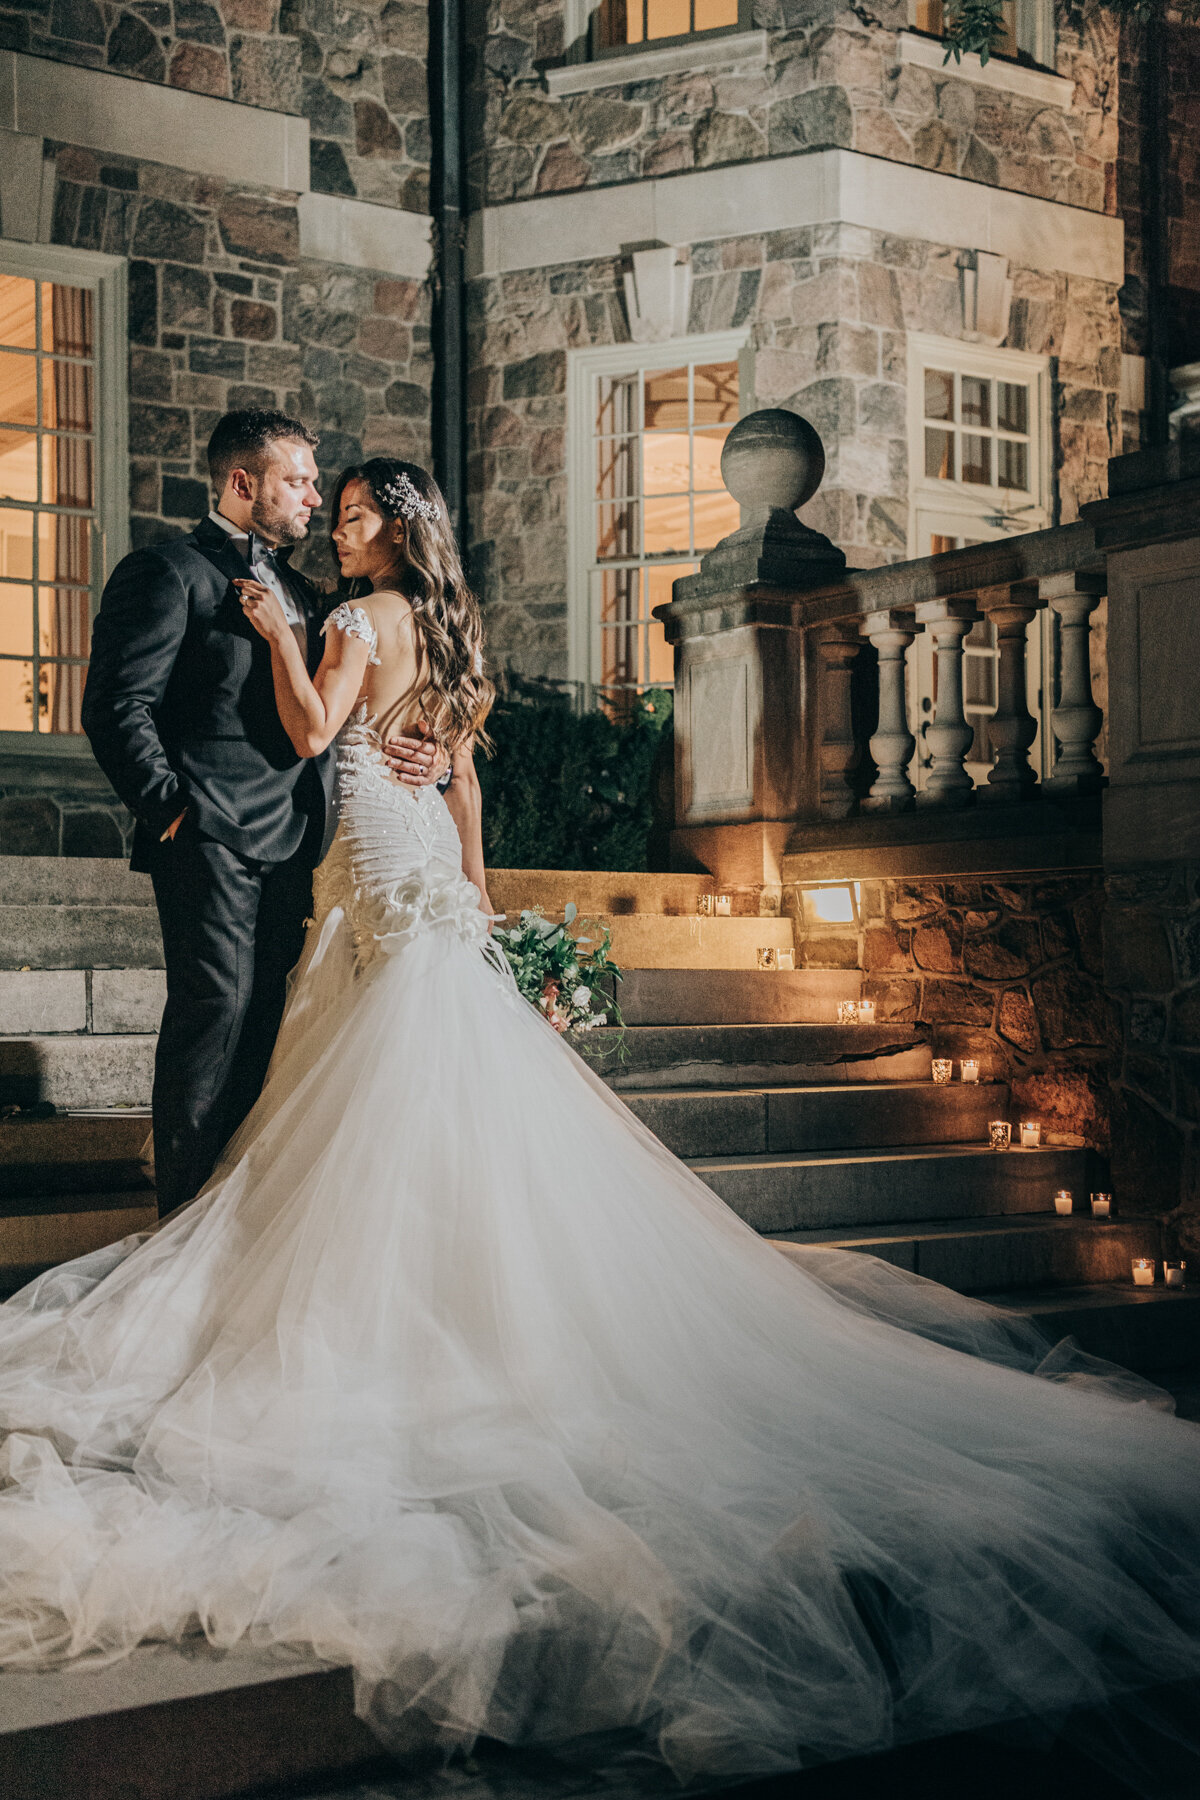 Glamorous night portraits of bride and groom at luxurious Graydon Hall Manor wedding photographed by Nova Markina